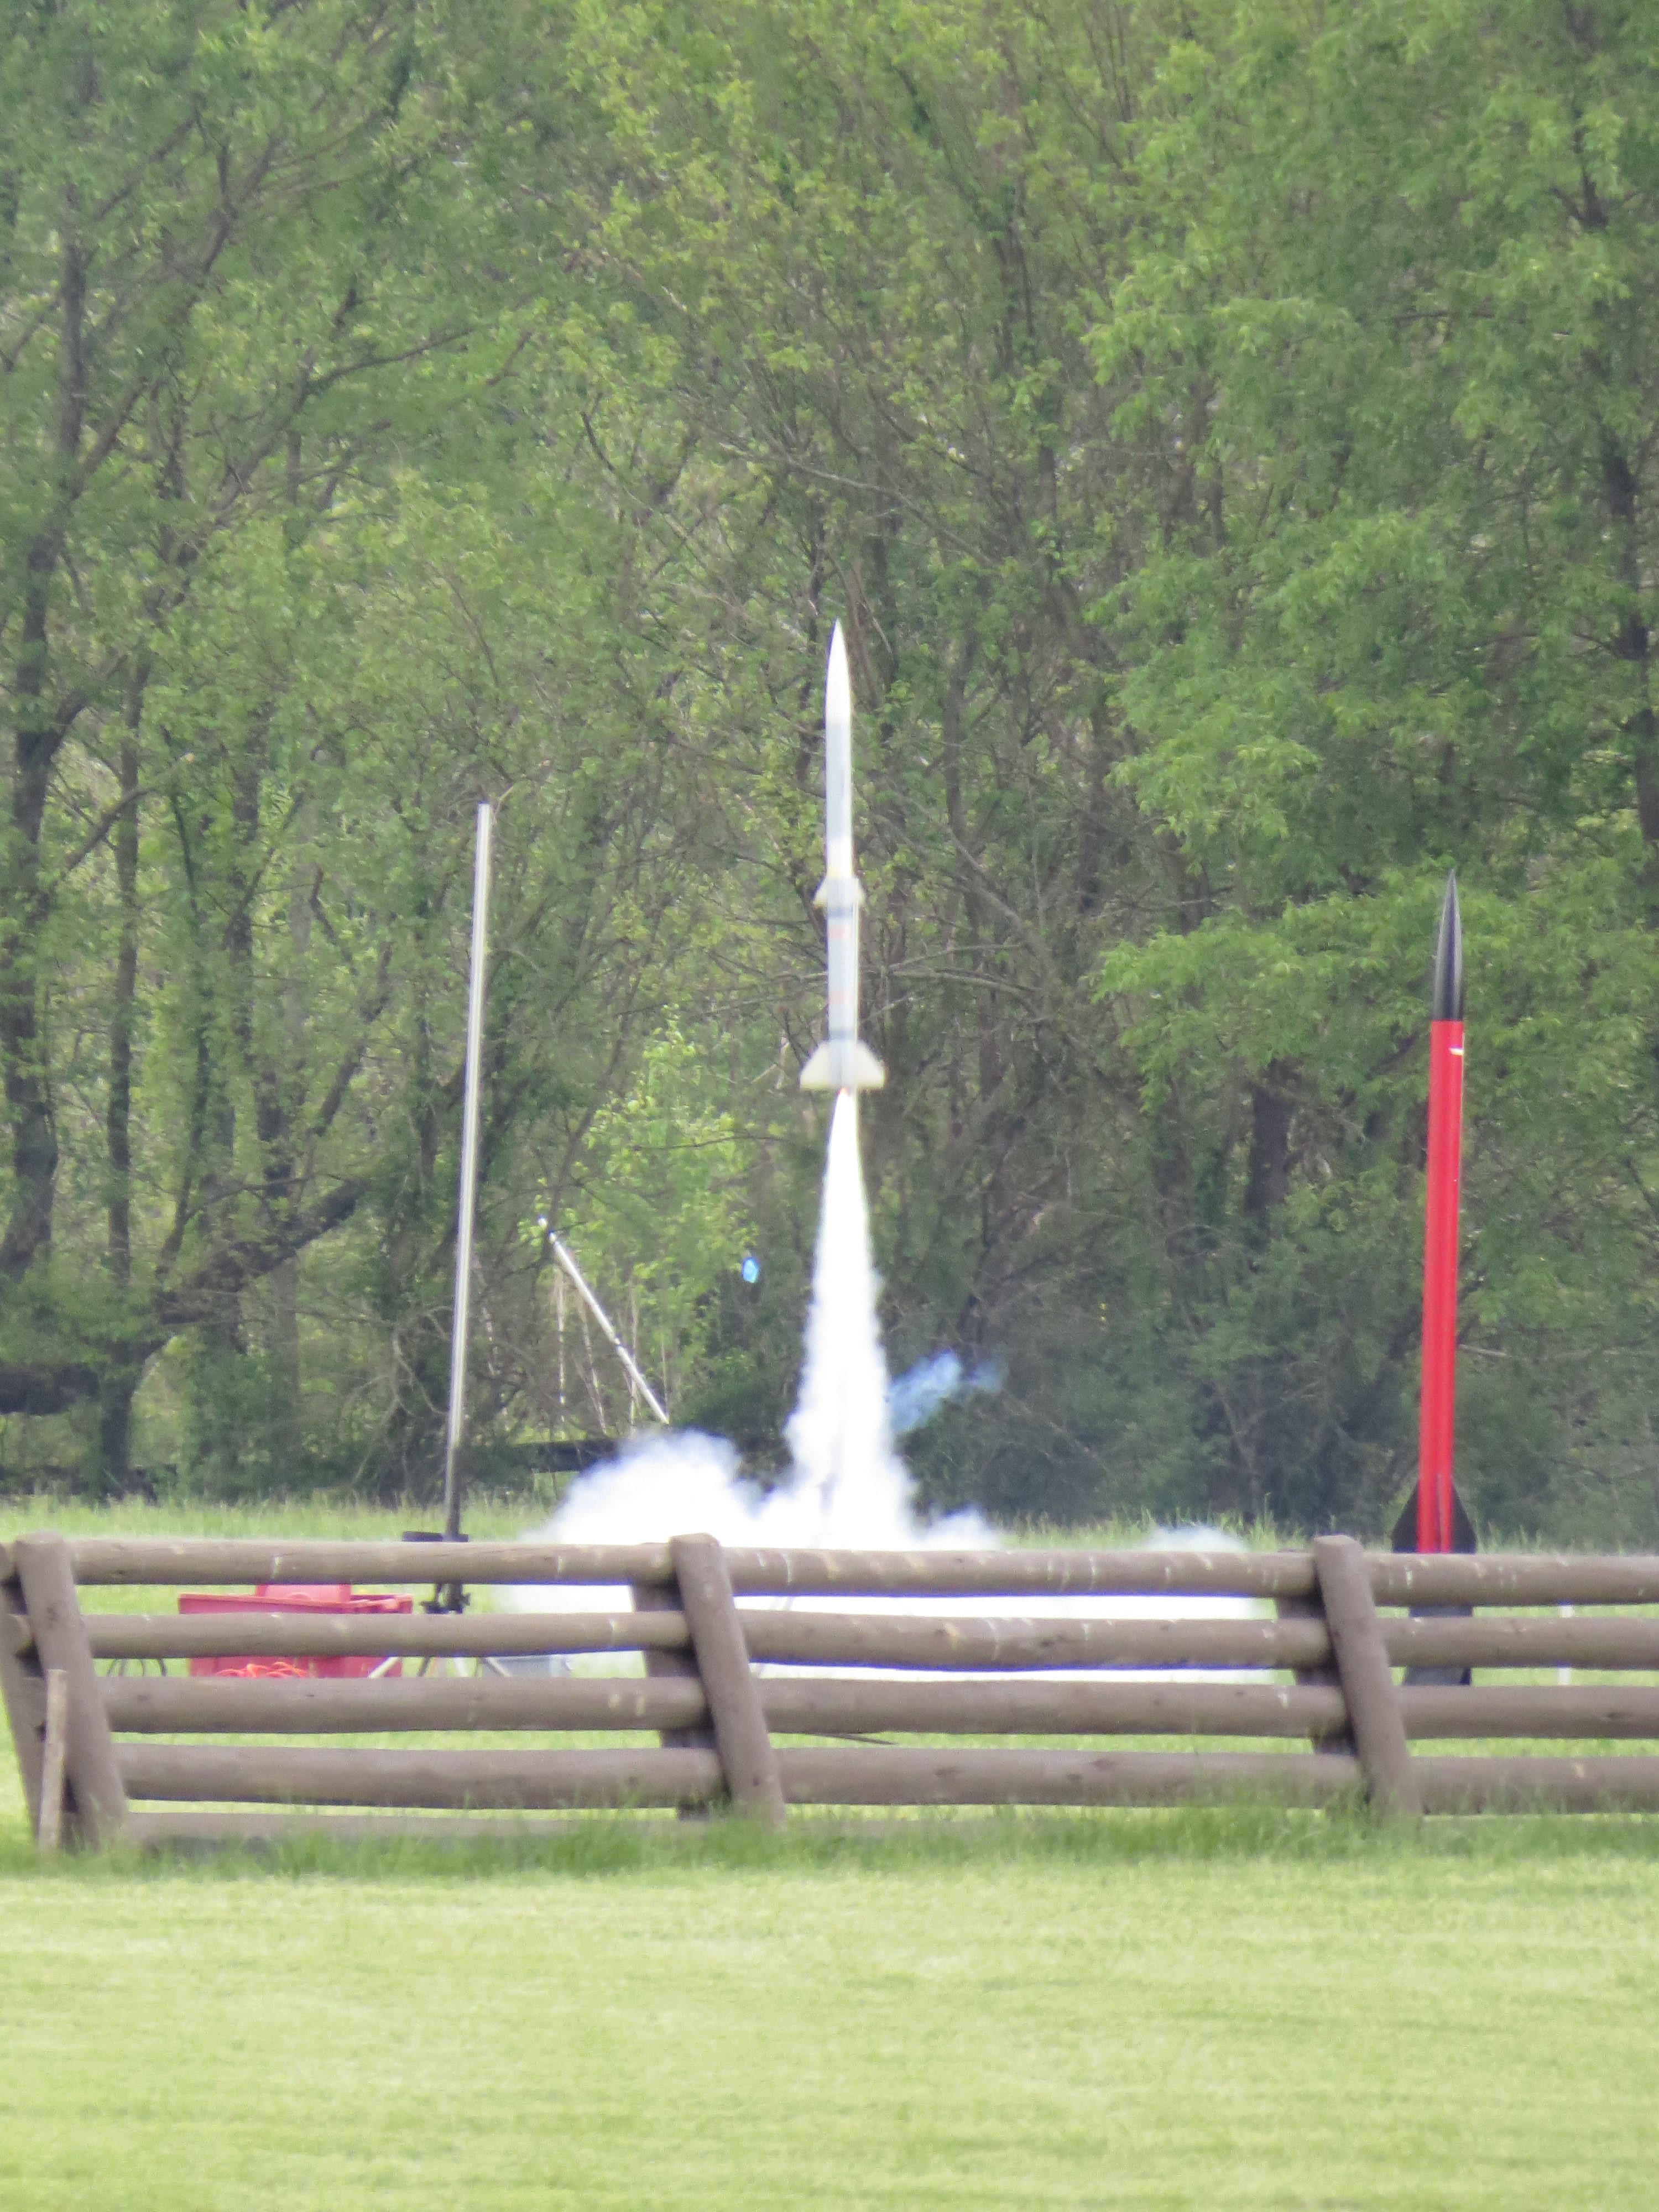 a model rocket launching